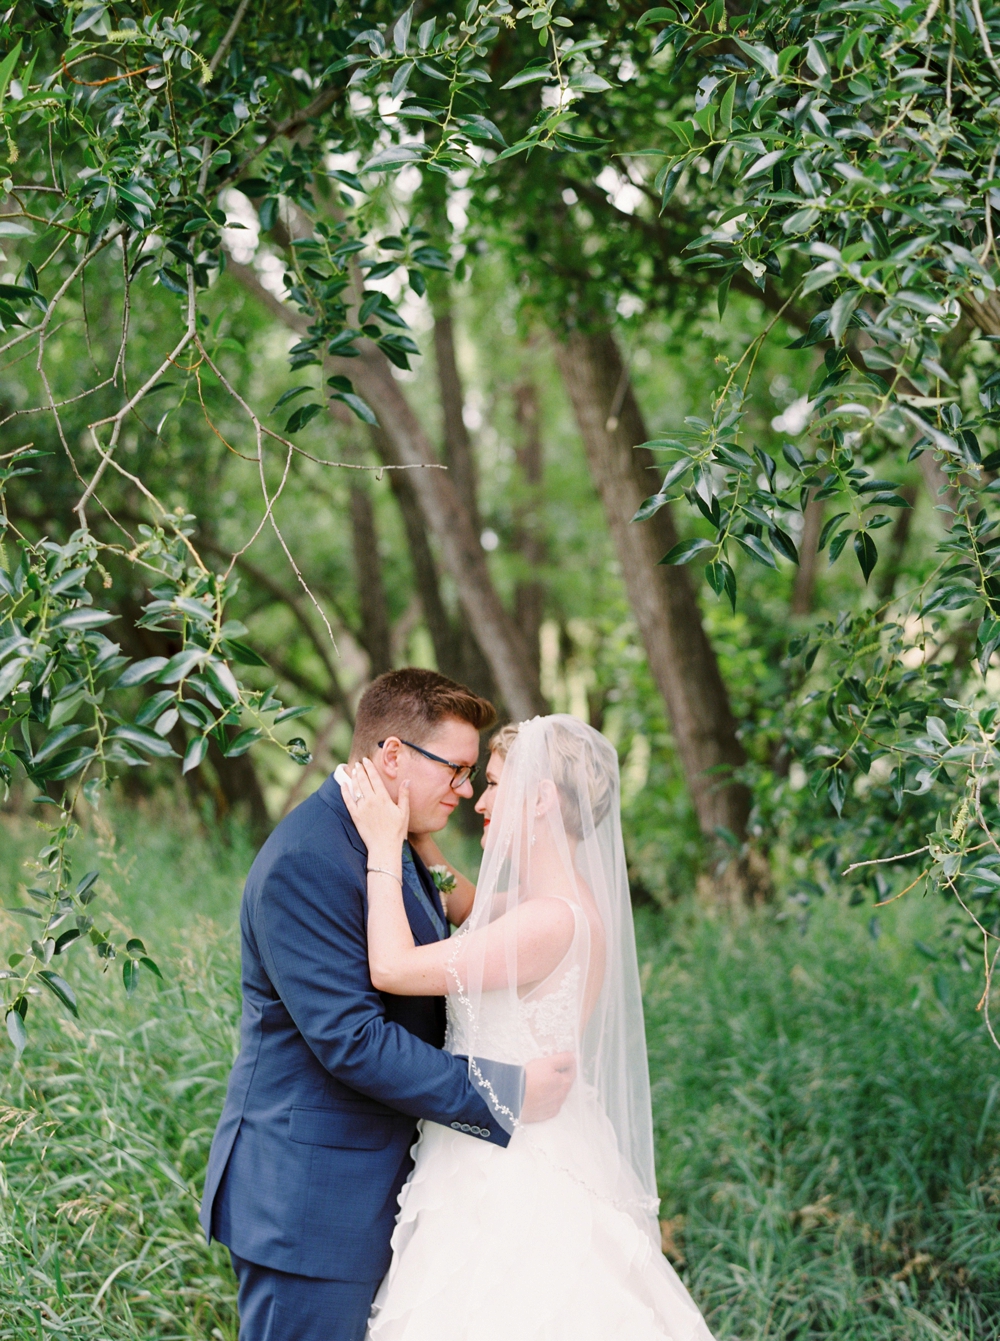 Calgary wedding photographers | The lake house wedding | Bride and groom photos | Justine Milton Photography